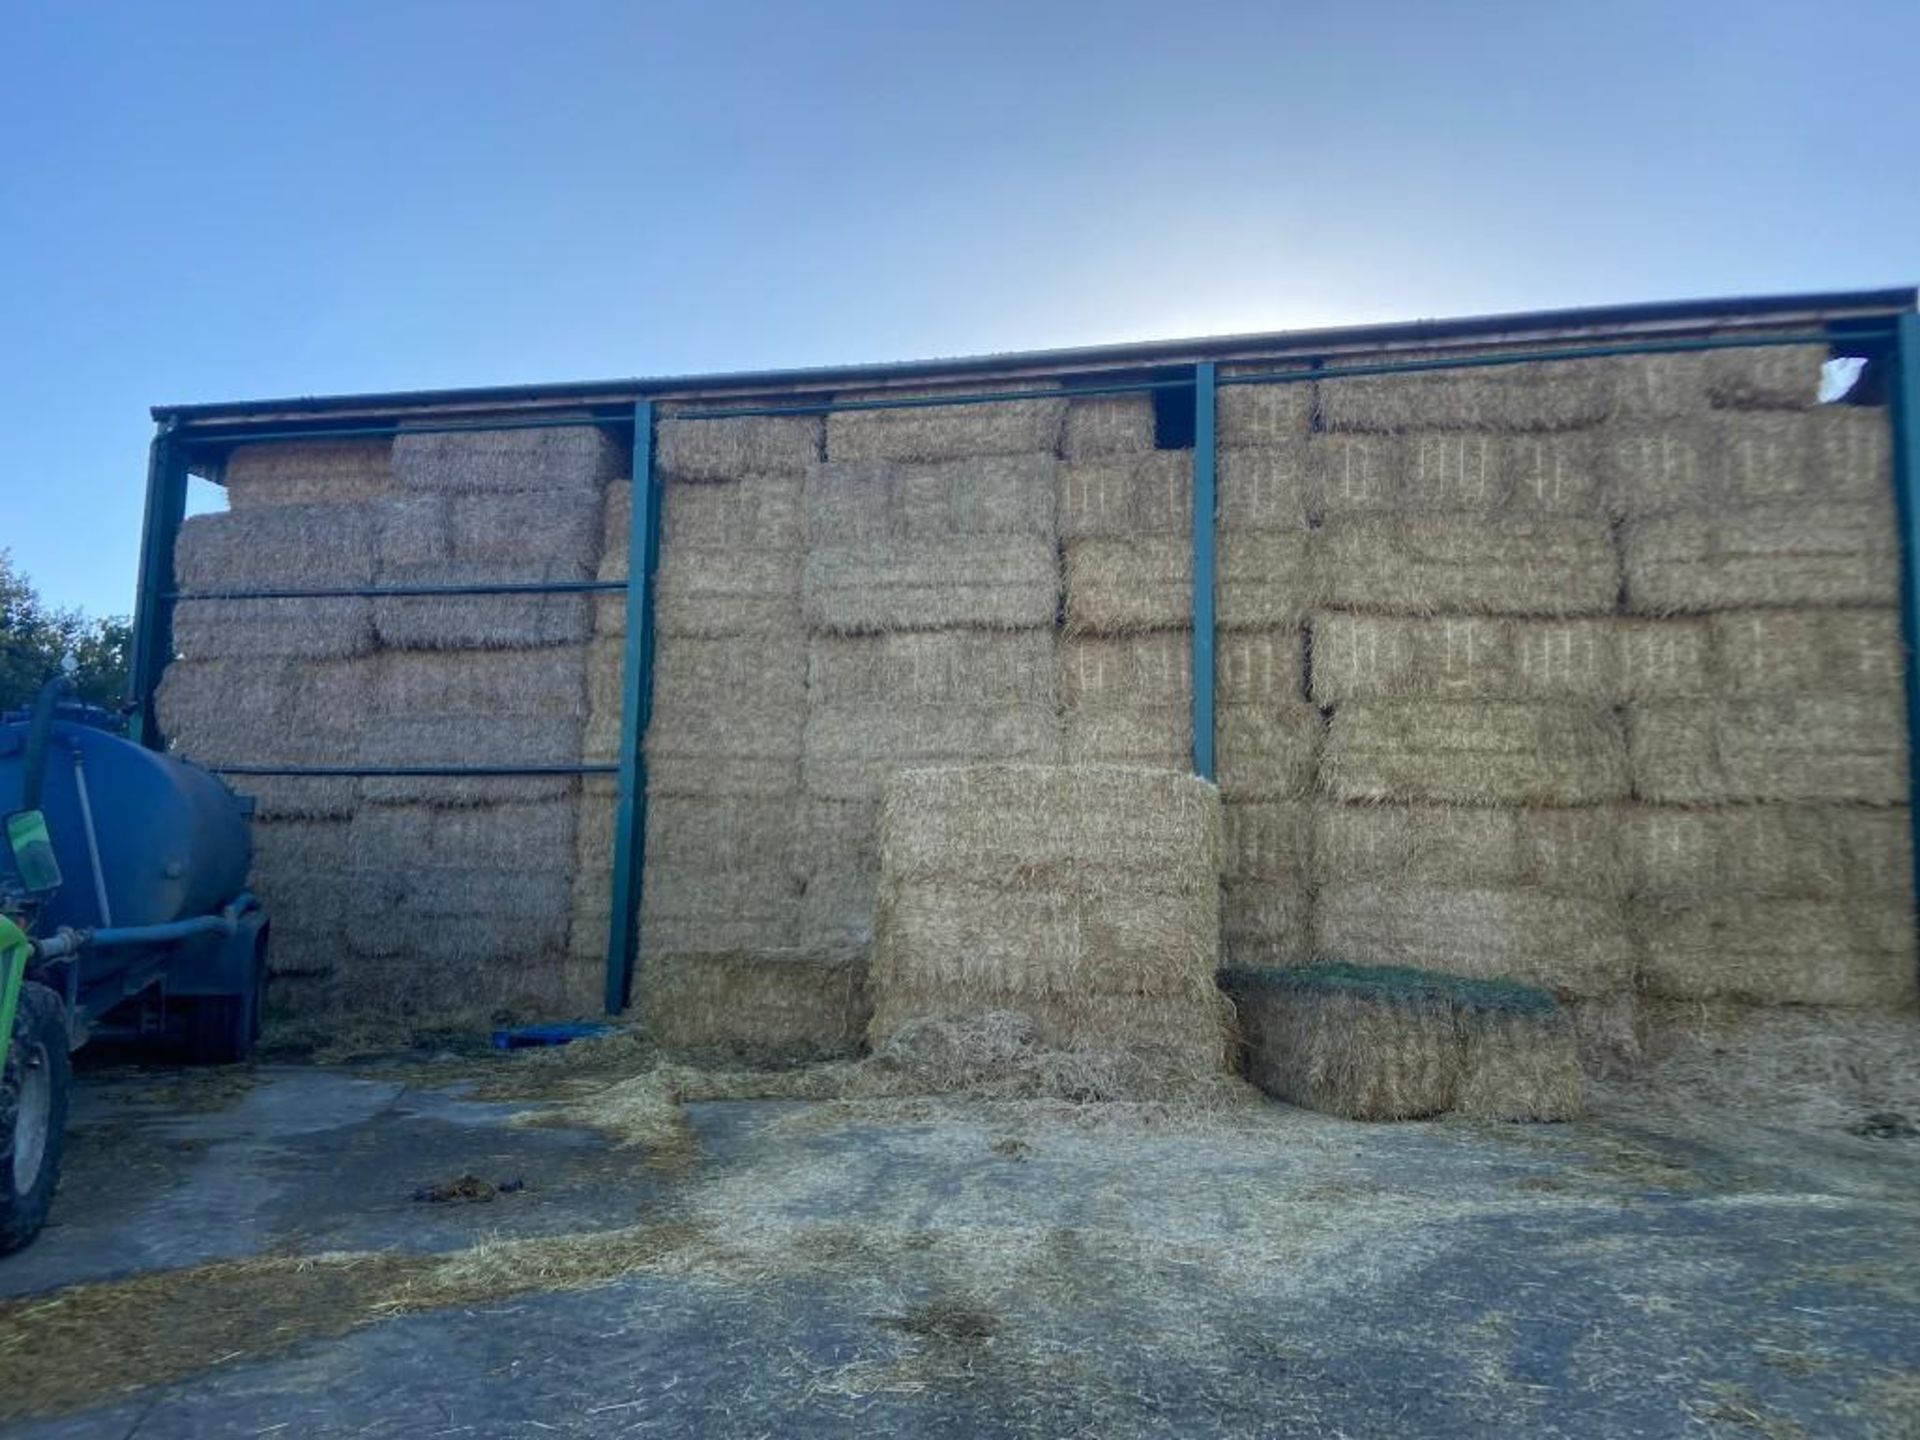 100 No. 2022 Wheat Straw Bales - Image 2 of 2